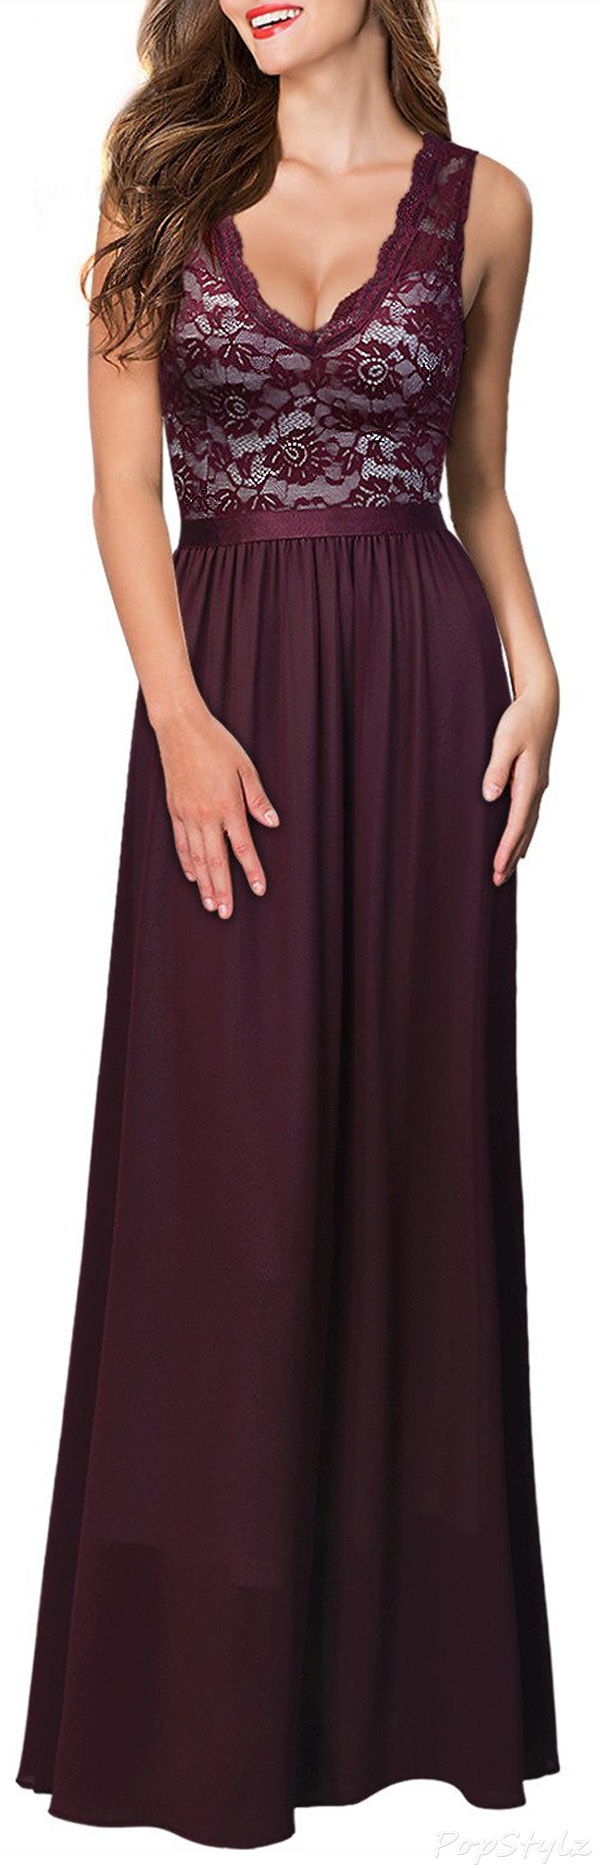 MIUSOL Double V-Neck Lace Top Long Evening Dress